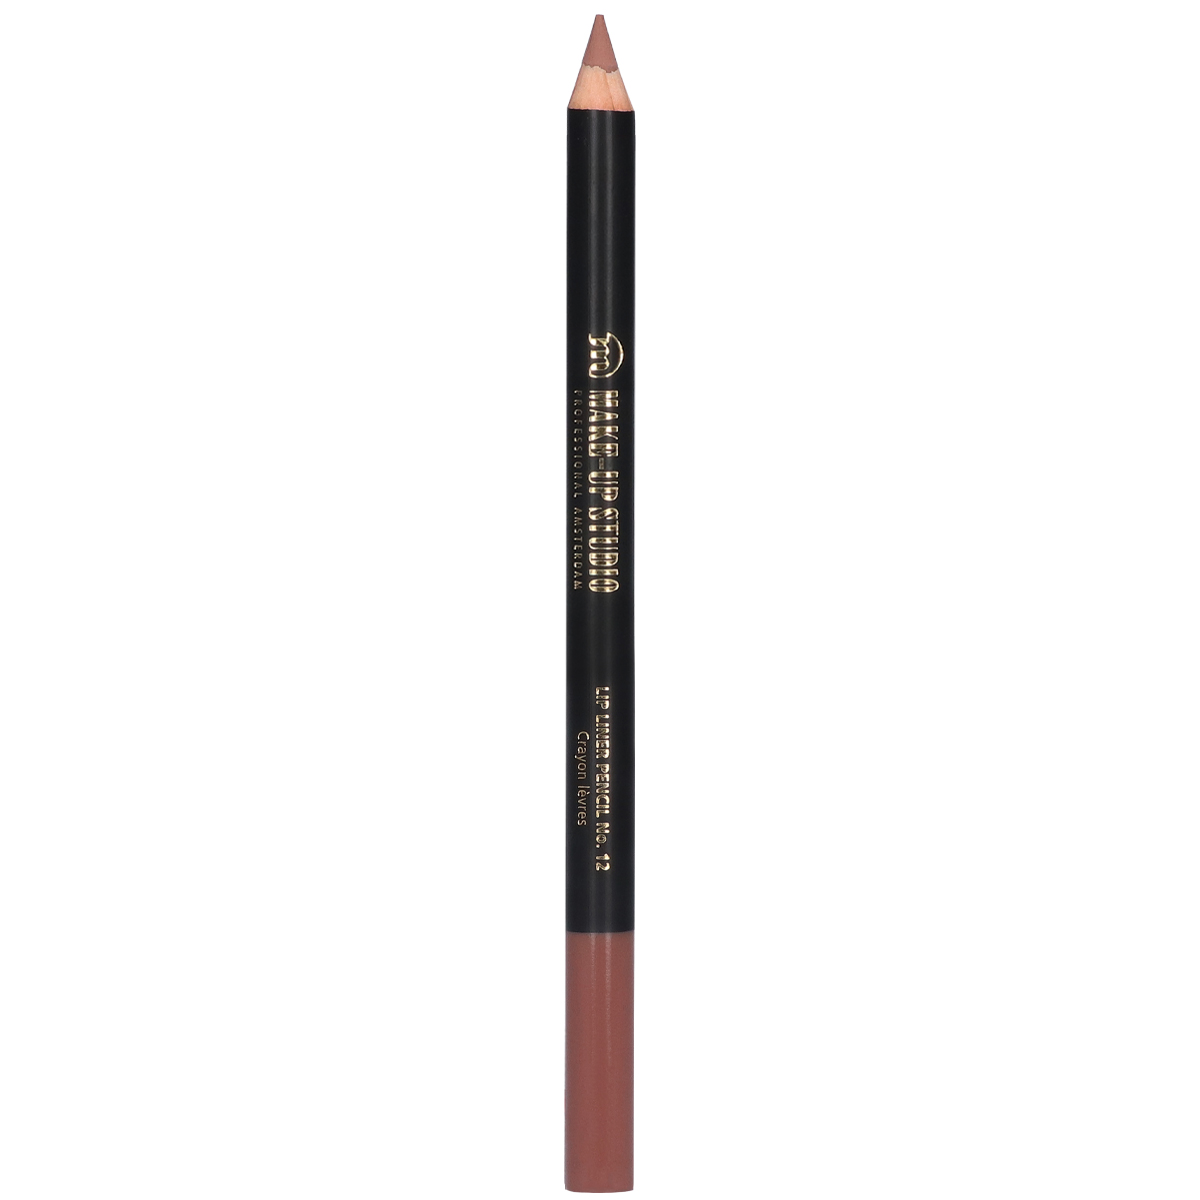 Make-up Studio Lip Liner Pencil Lippotlood - 12 Nude brown